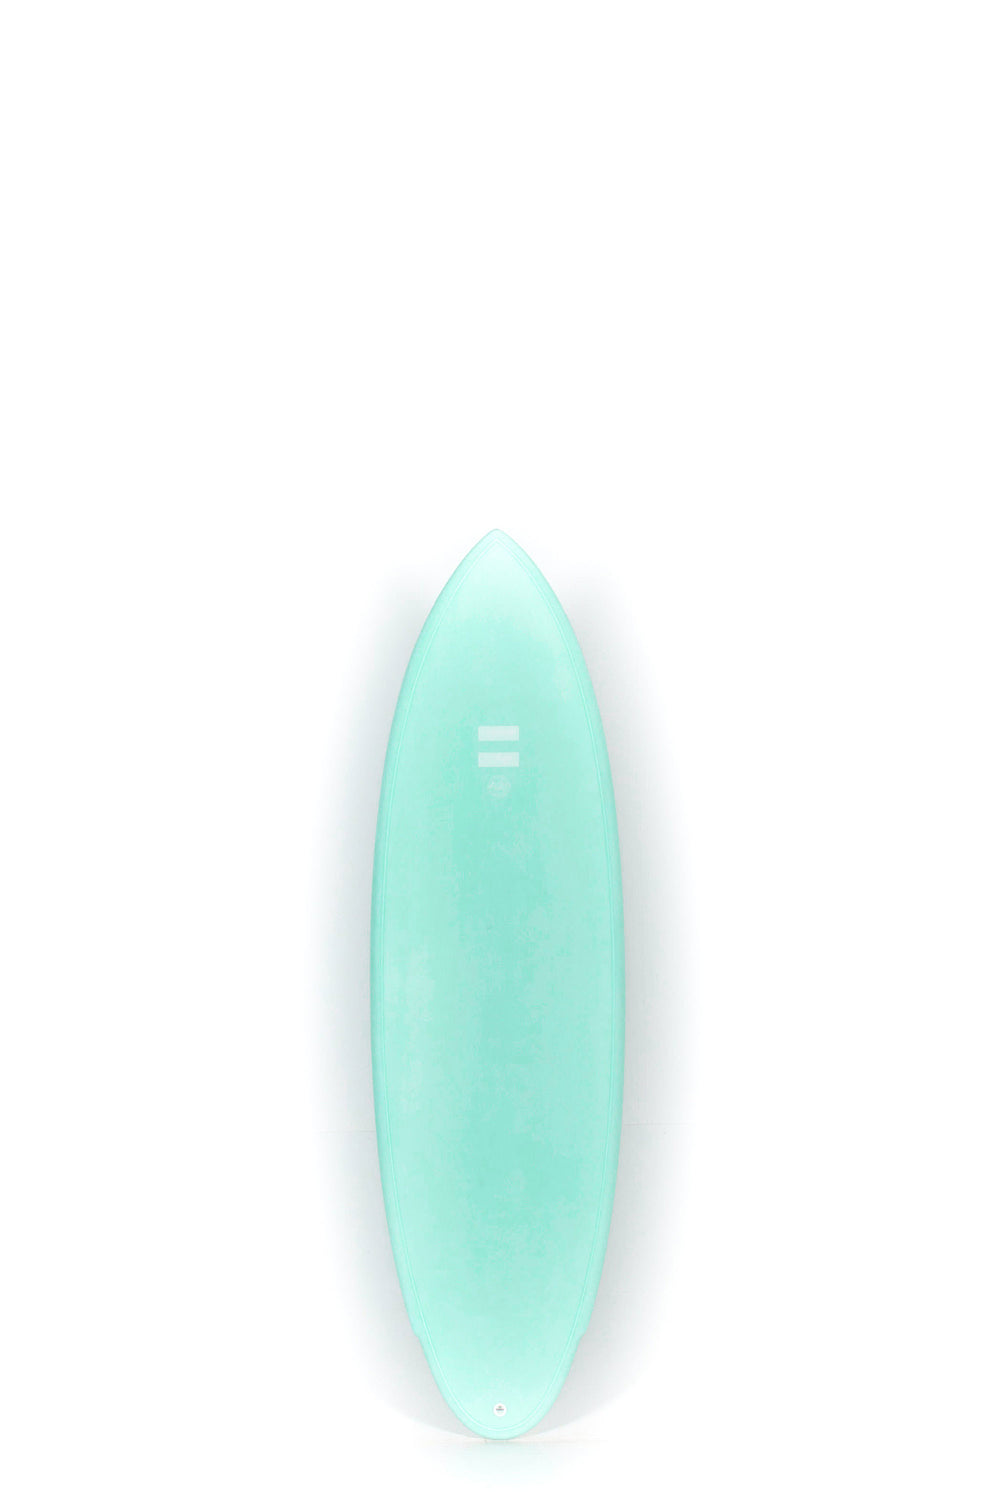 Pukas Surf Shop - Indio Surfboard - Endurance - RANCHO Aqua - 5'8